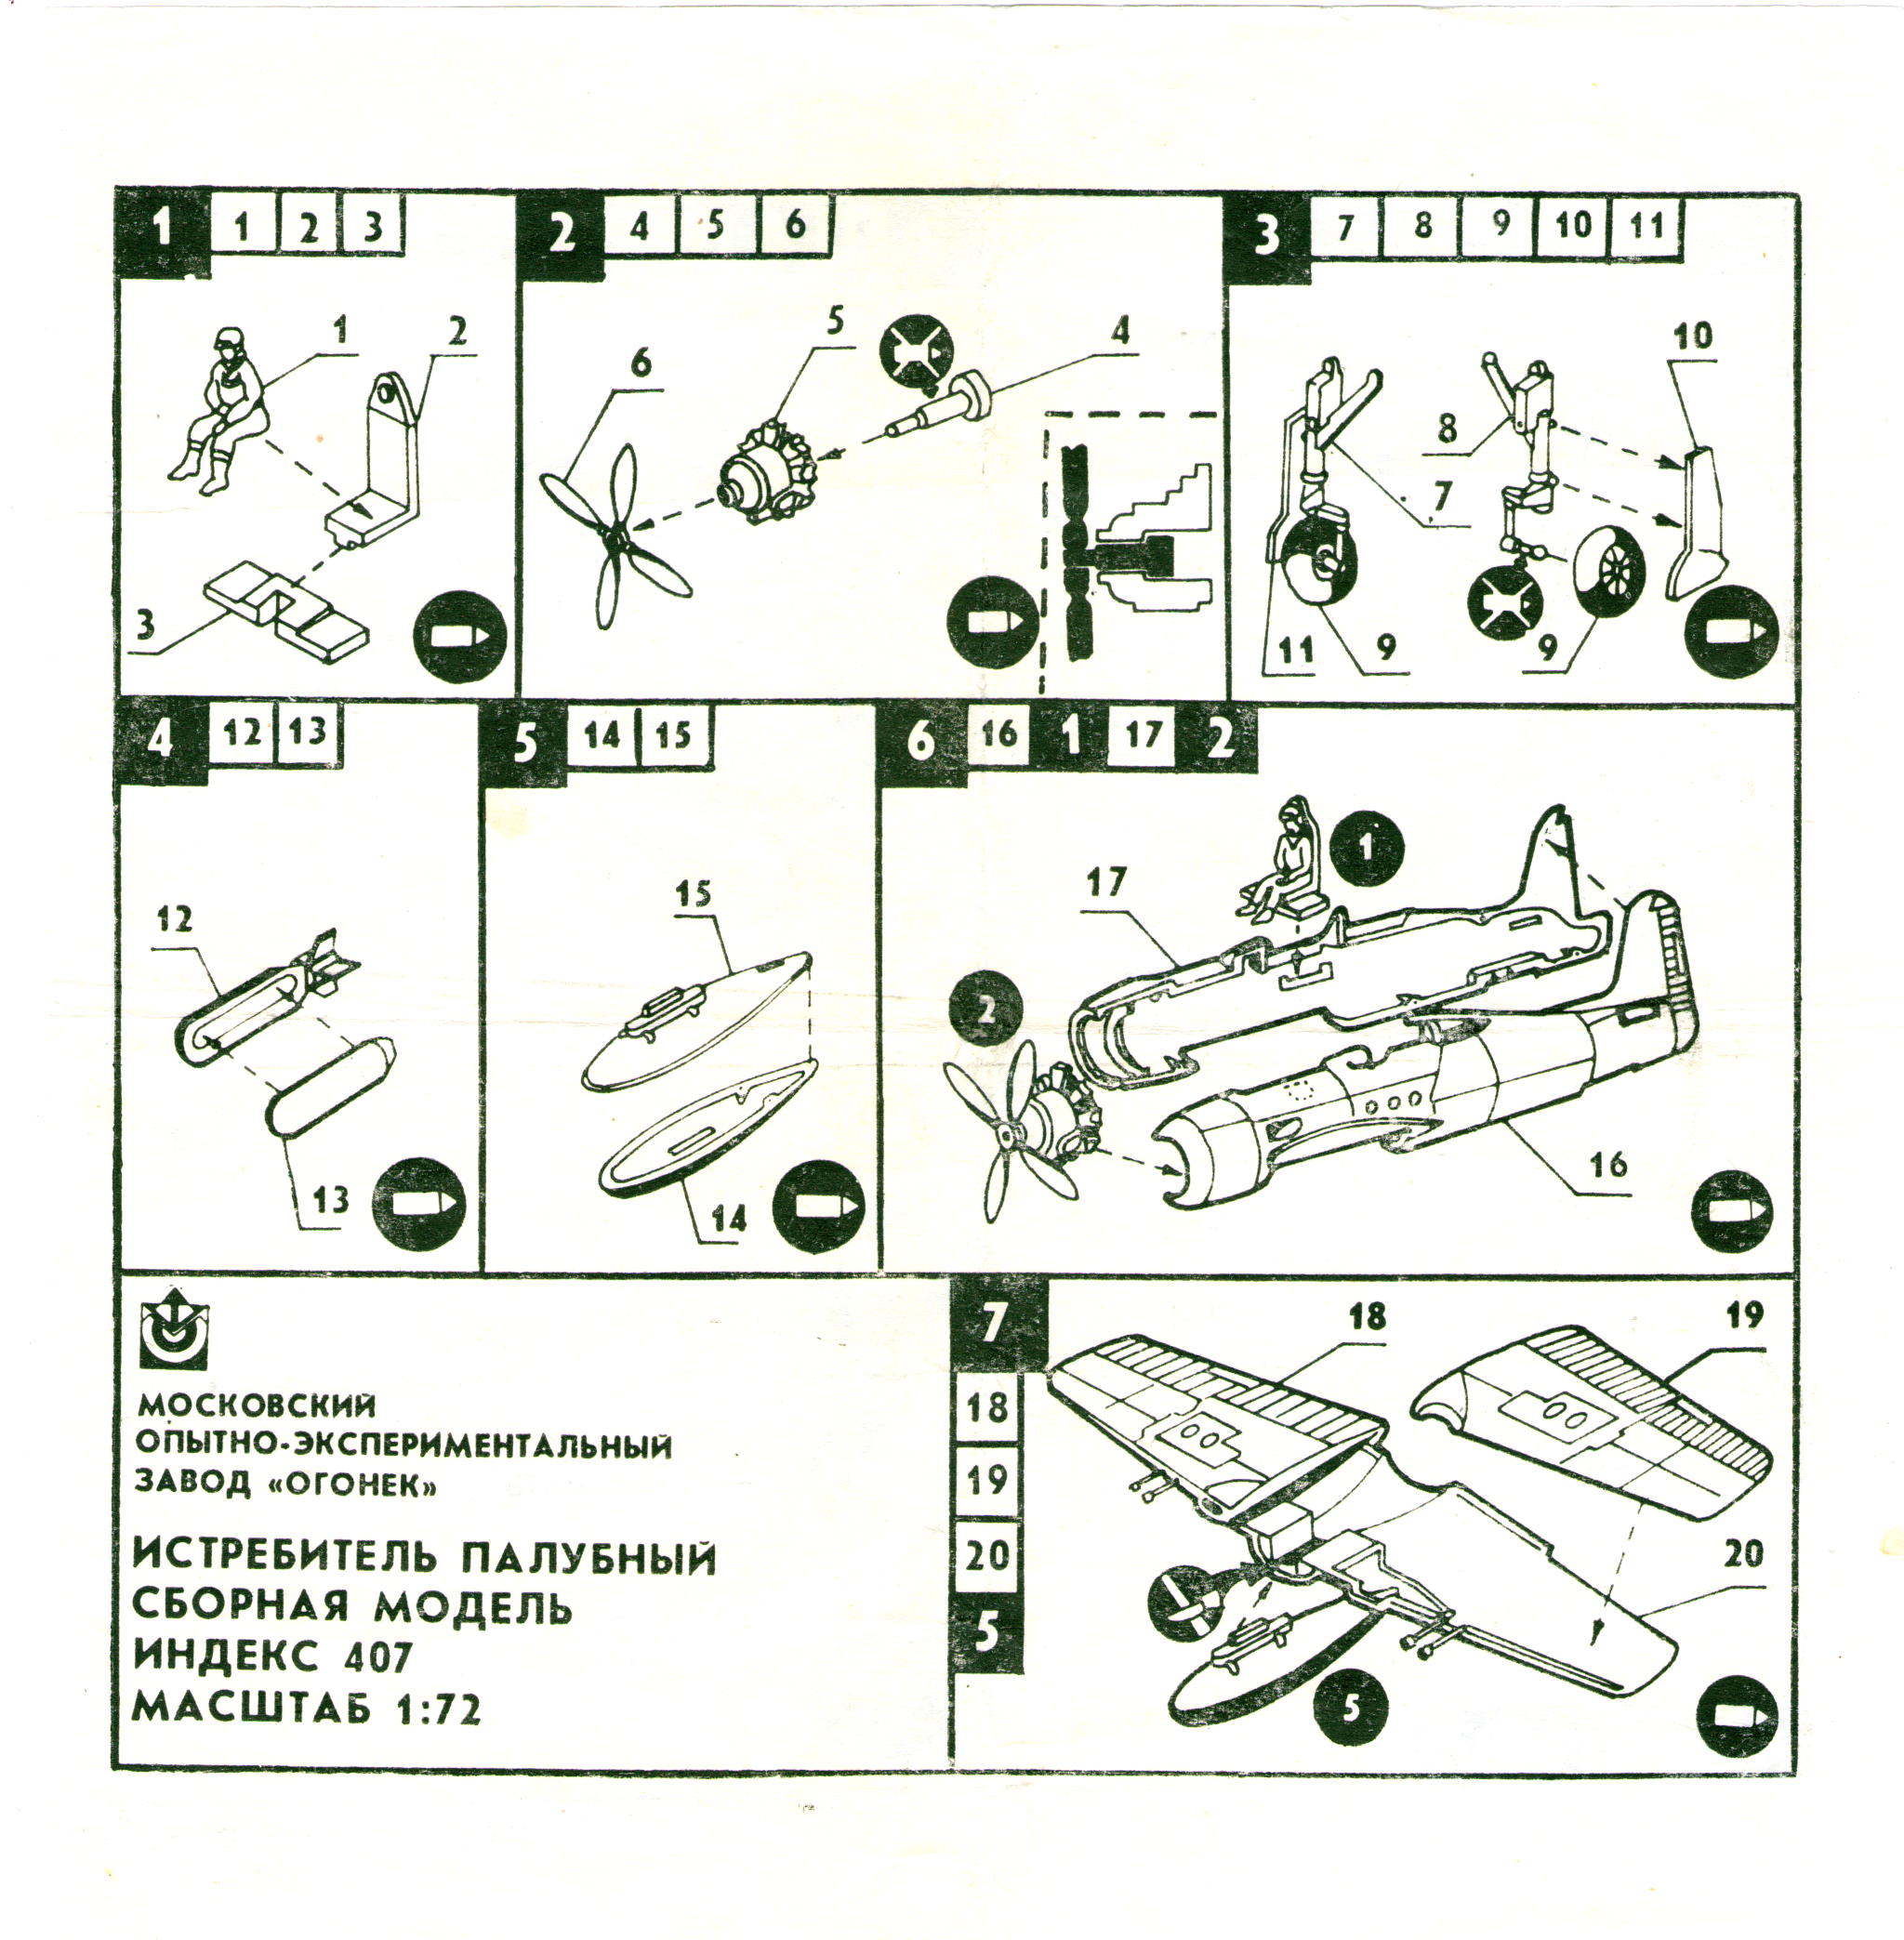 Index 407 Deck fighter, Moscow Test Experimental Plant Ogoniek, 1986-1989, инструкция по сборке, лицевая сторона